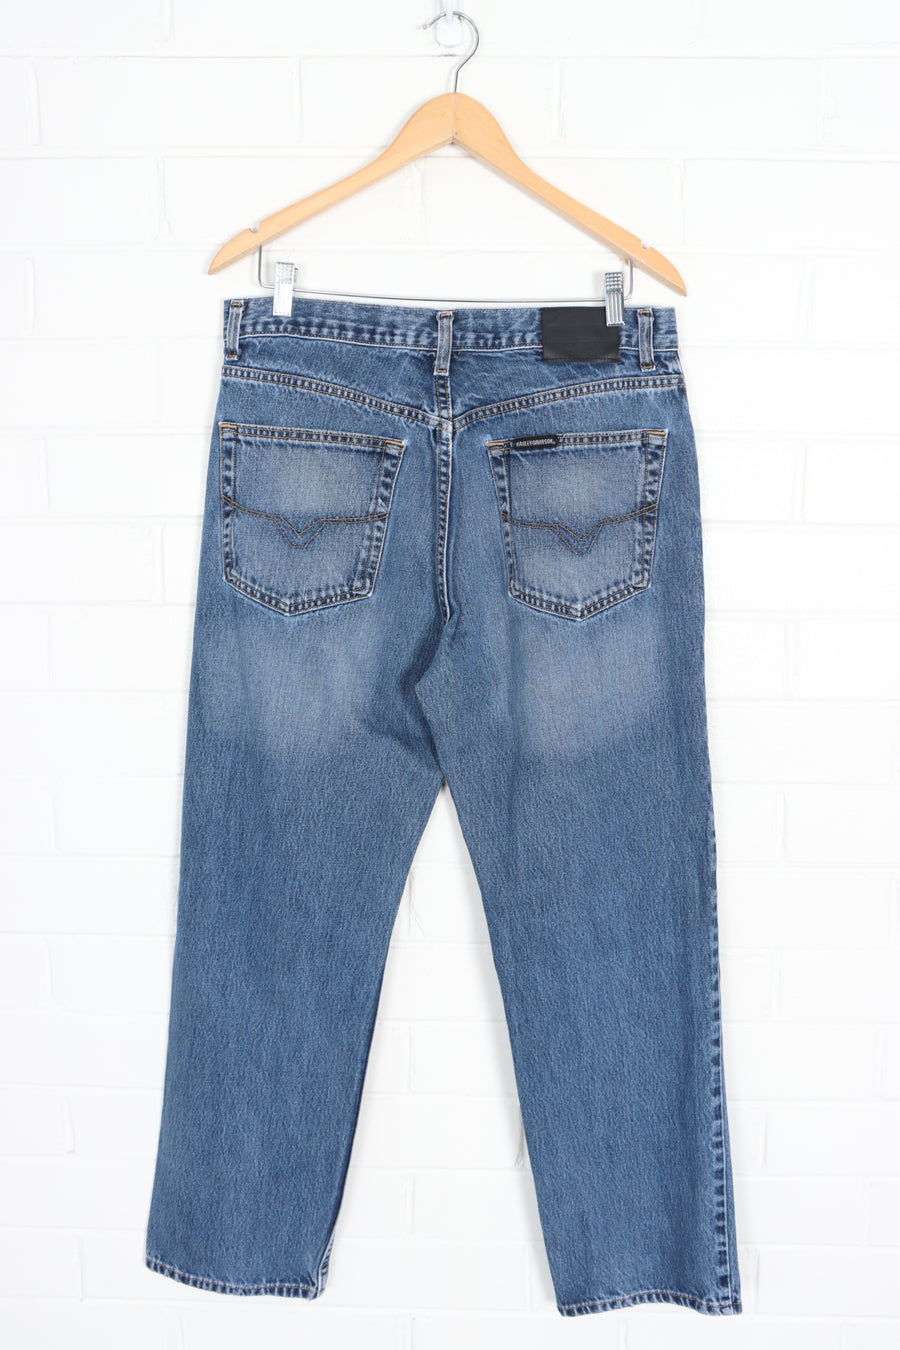 HARLEY DAVIDSON Medium Wash Denim Y2K Jeans (34x30)